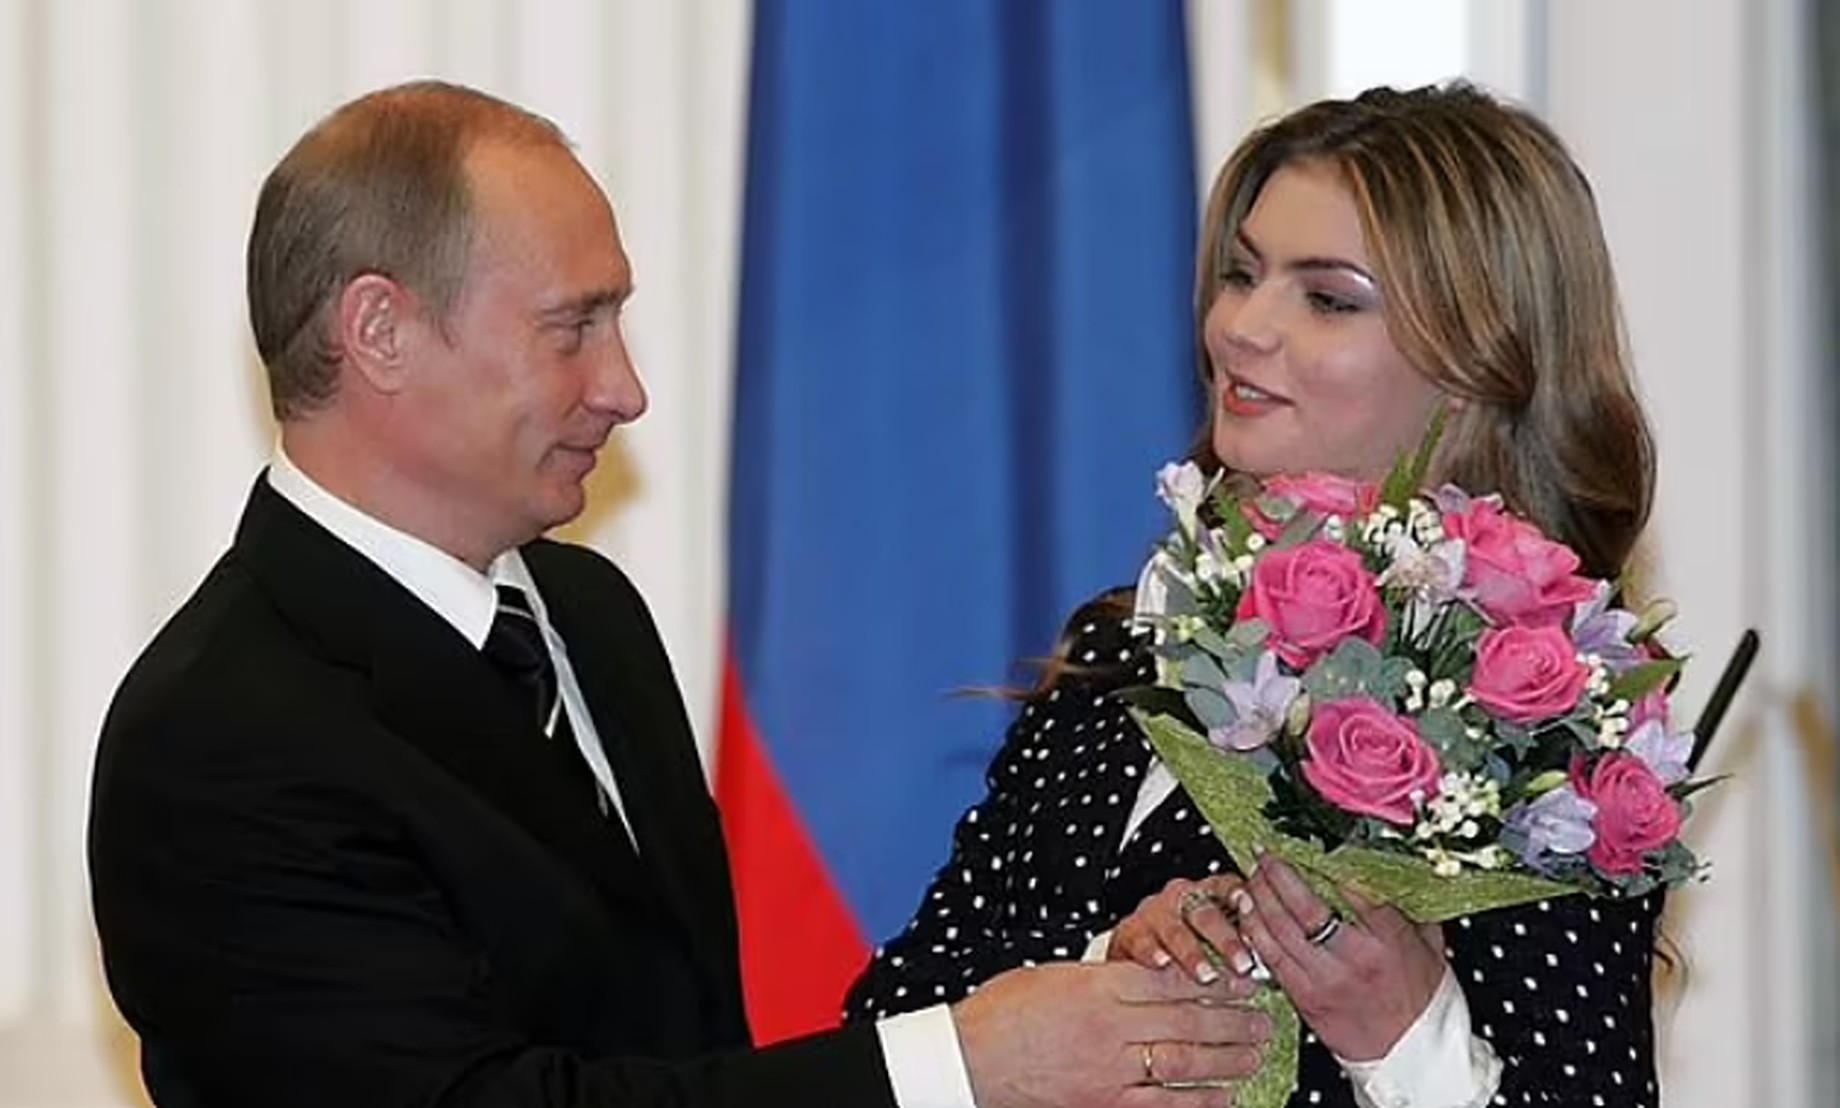 https://www.straitstimes.com/world/europe/eu-proposes-sanctions-on-alina-kabaeva-said-to-be-close-to-russias-putin